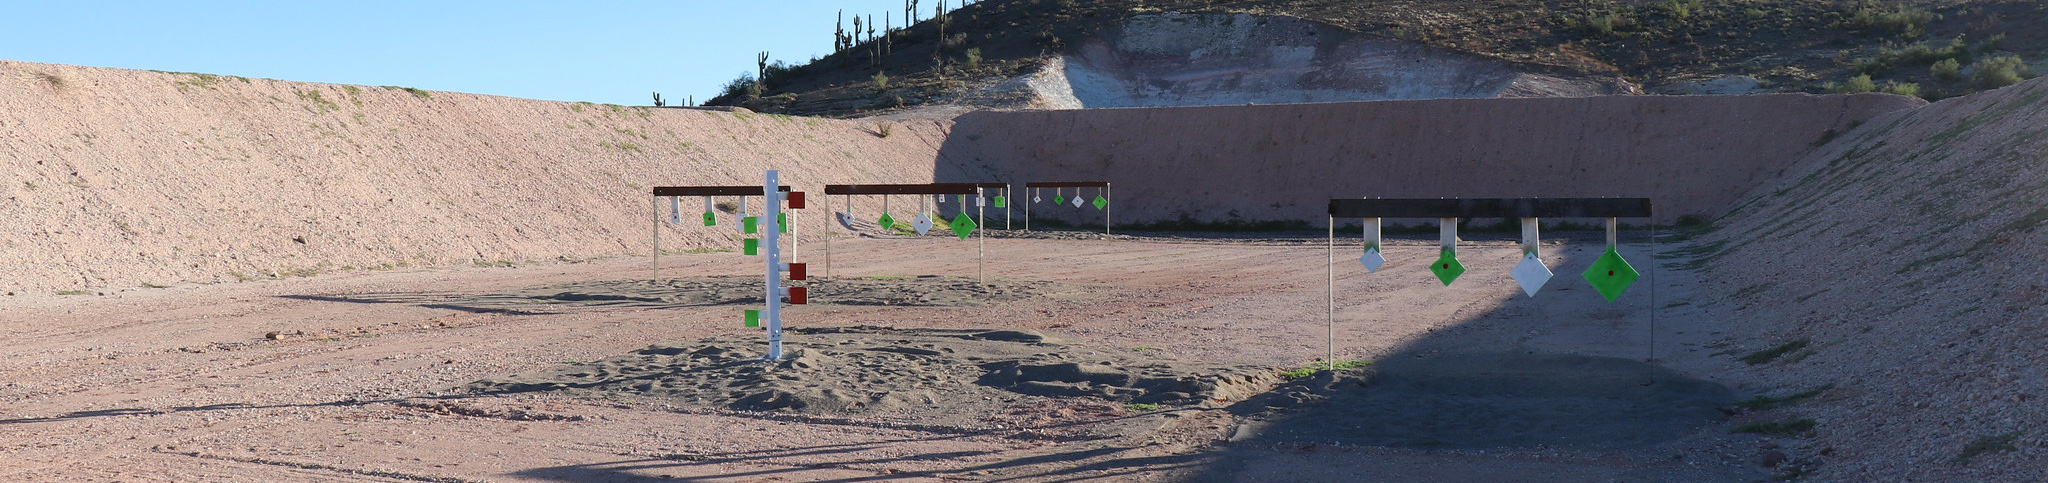 Shooting Lanes at Church Camp Shooting Range- north of Phoenix, AZ